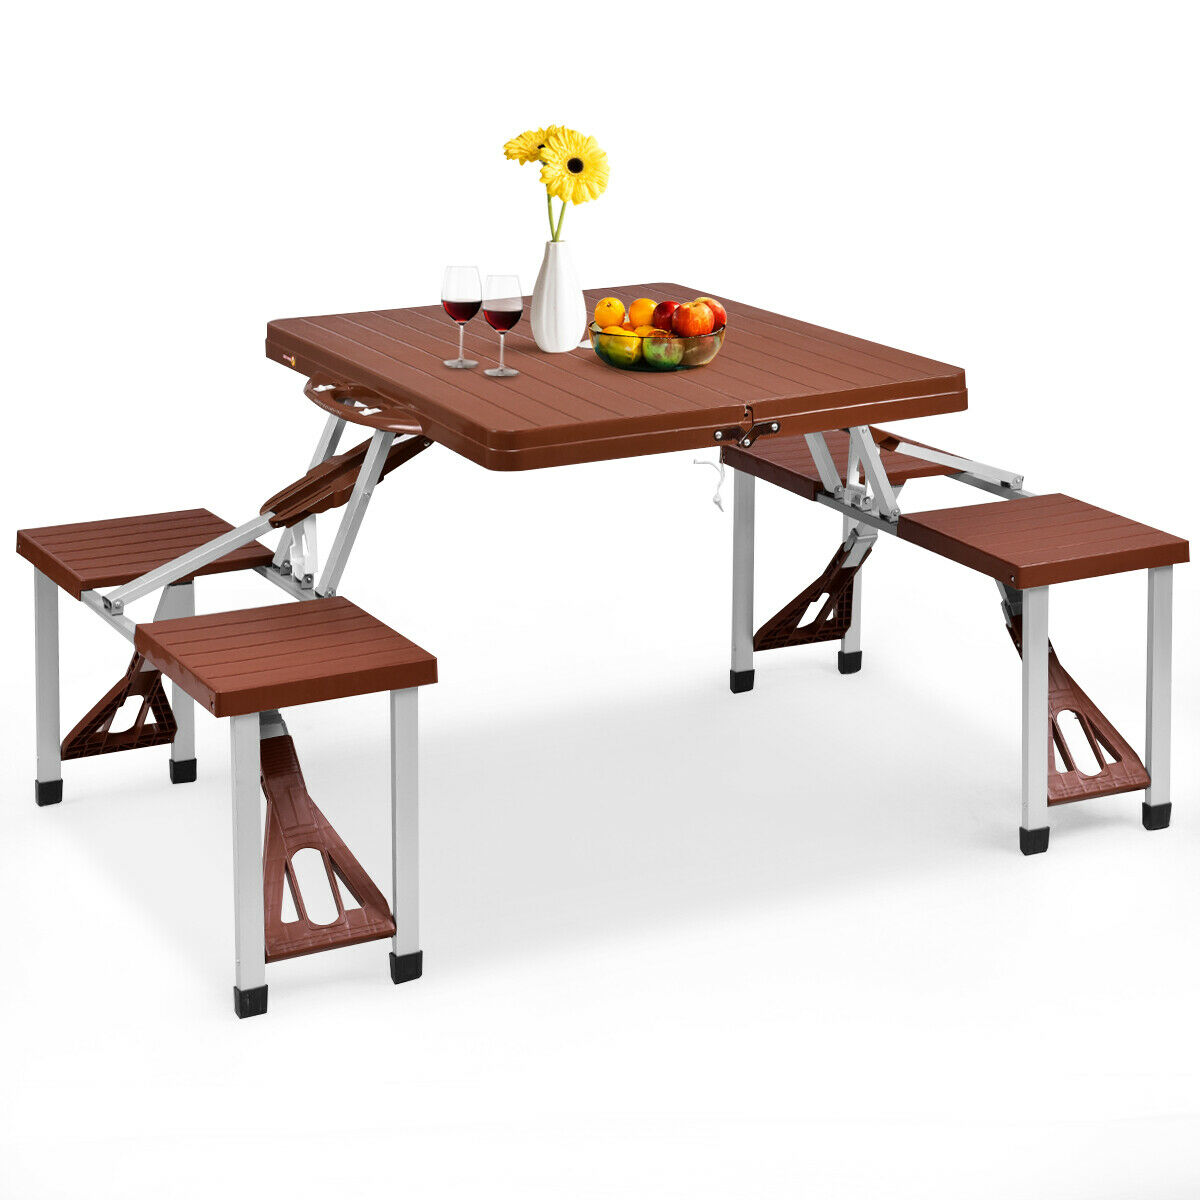 children's picnic table kmart